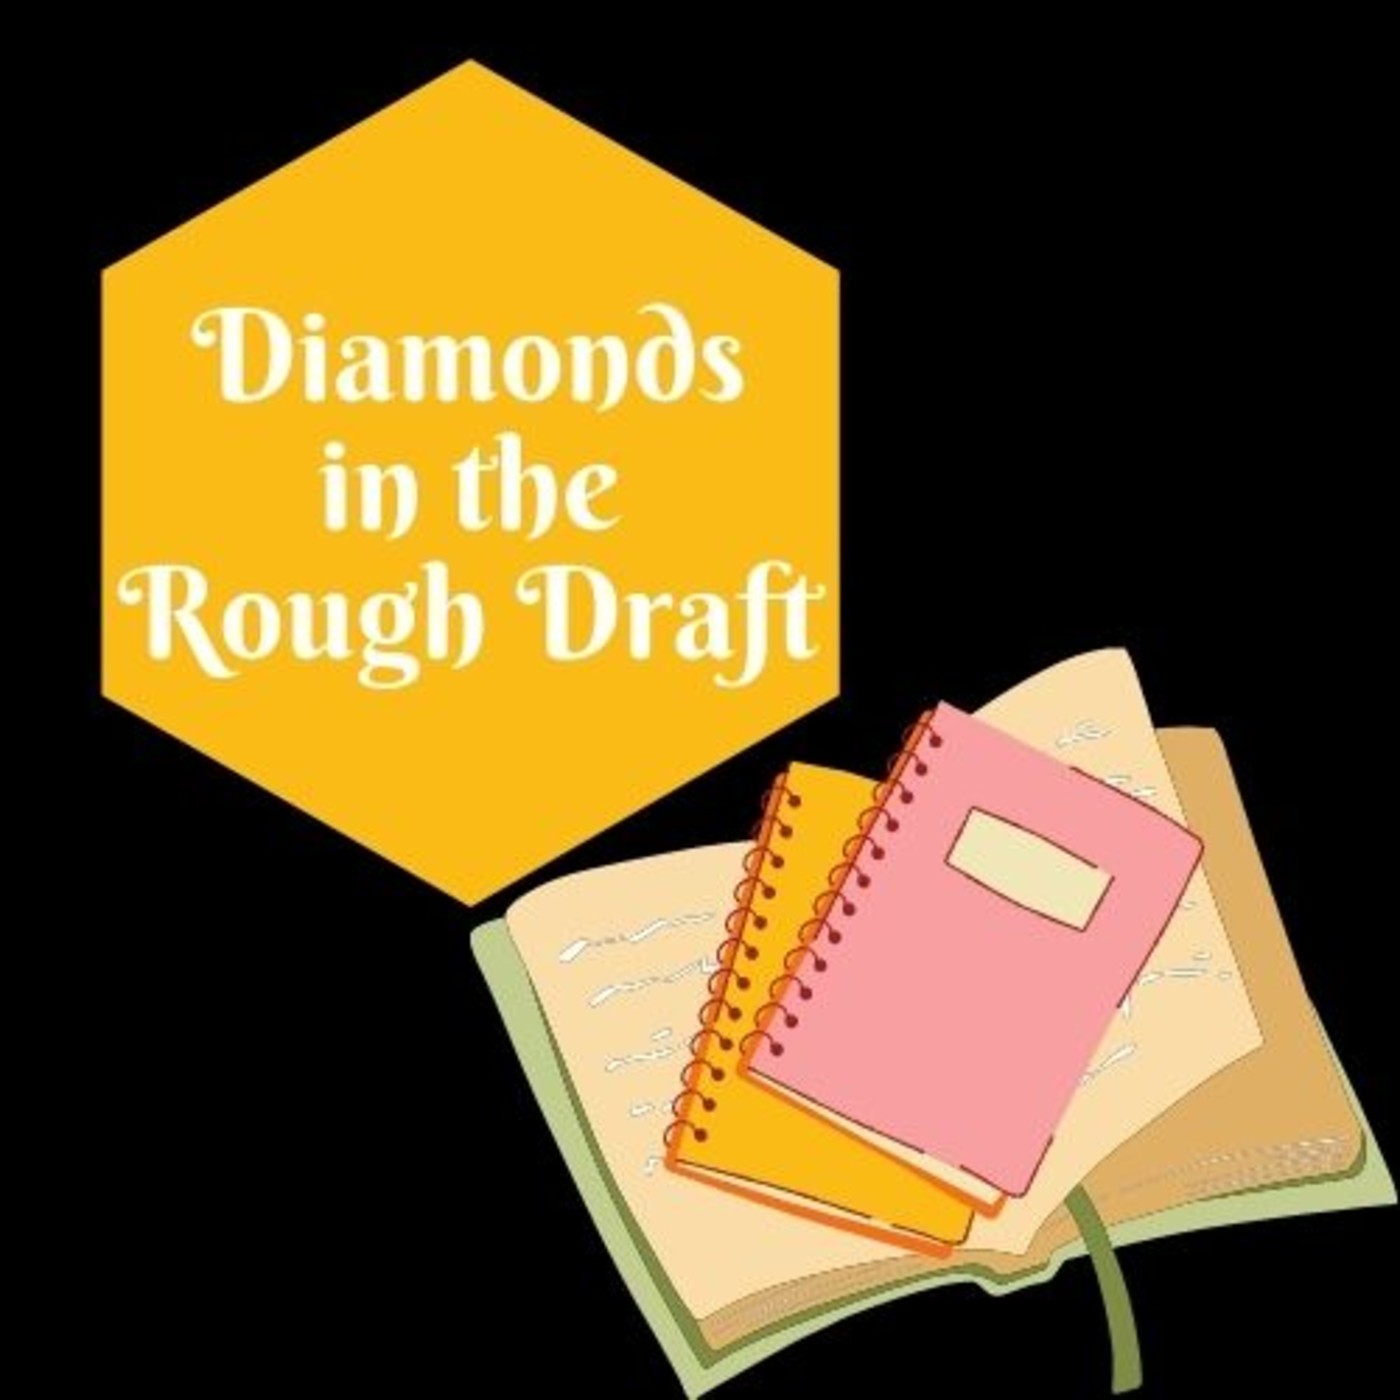 Diamonds in the Rough Draft